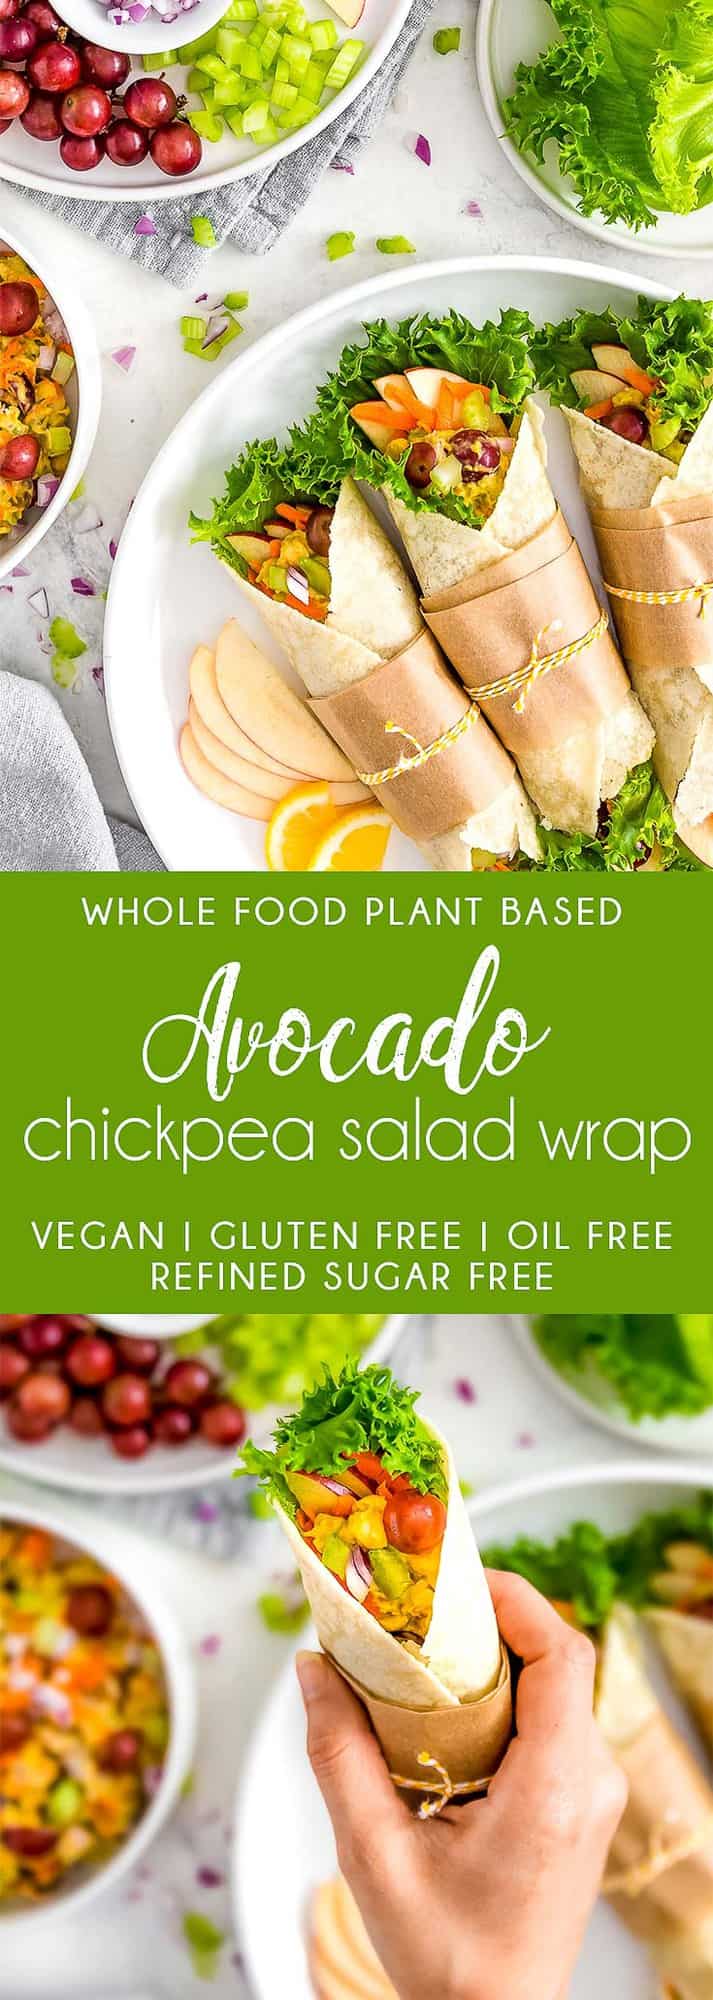 Avocado Chickpea Salad Wrap, Vegan chickpea Burrito, avocado, chickpea, vegan wrap, vegan burrito, plant based, vegan, vegetarian, whole food plant based, gluten free, recipe, wfpb, healthy, healthy vegan, oil free, no refined sugar, no oil, refined sugar free, dairy free, lunch, easy recipe, fast recipe, sides, picnic, summer recipe, picnic recipe,